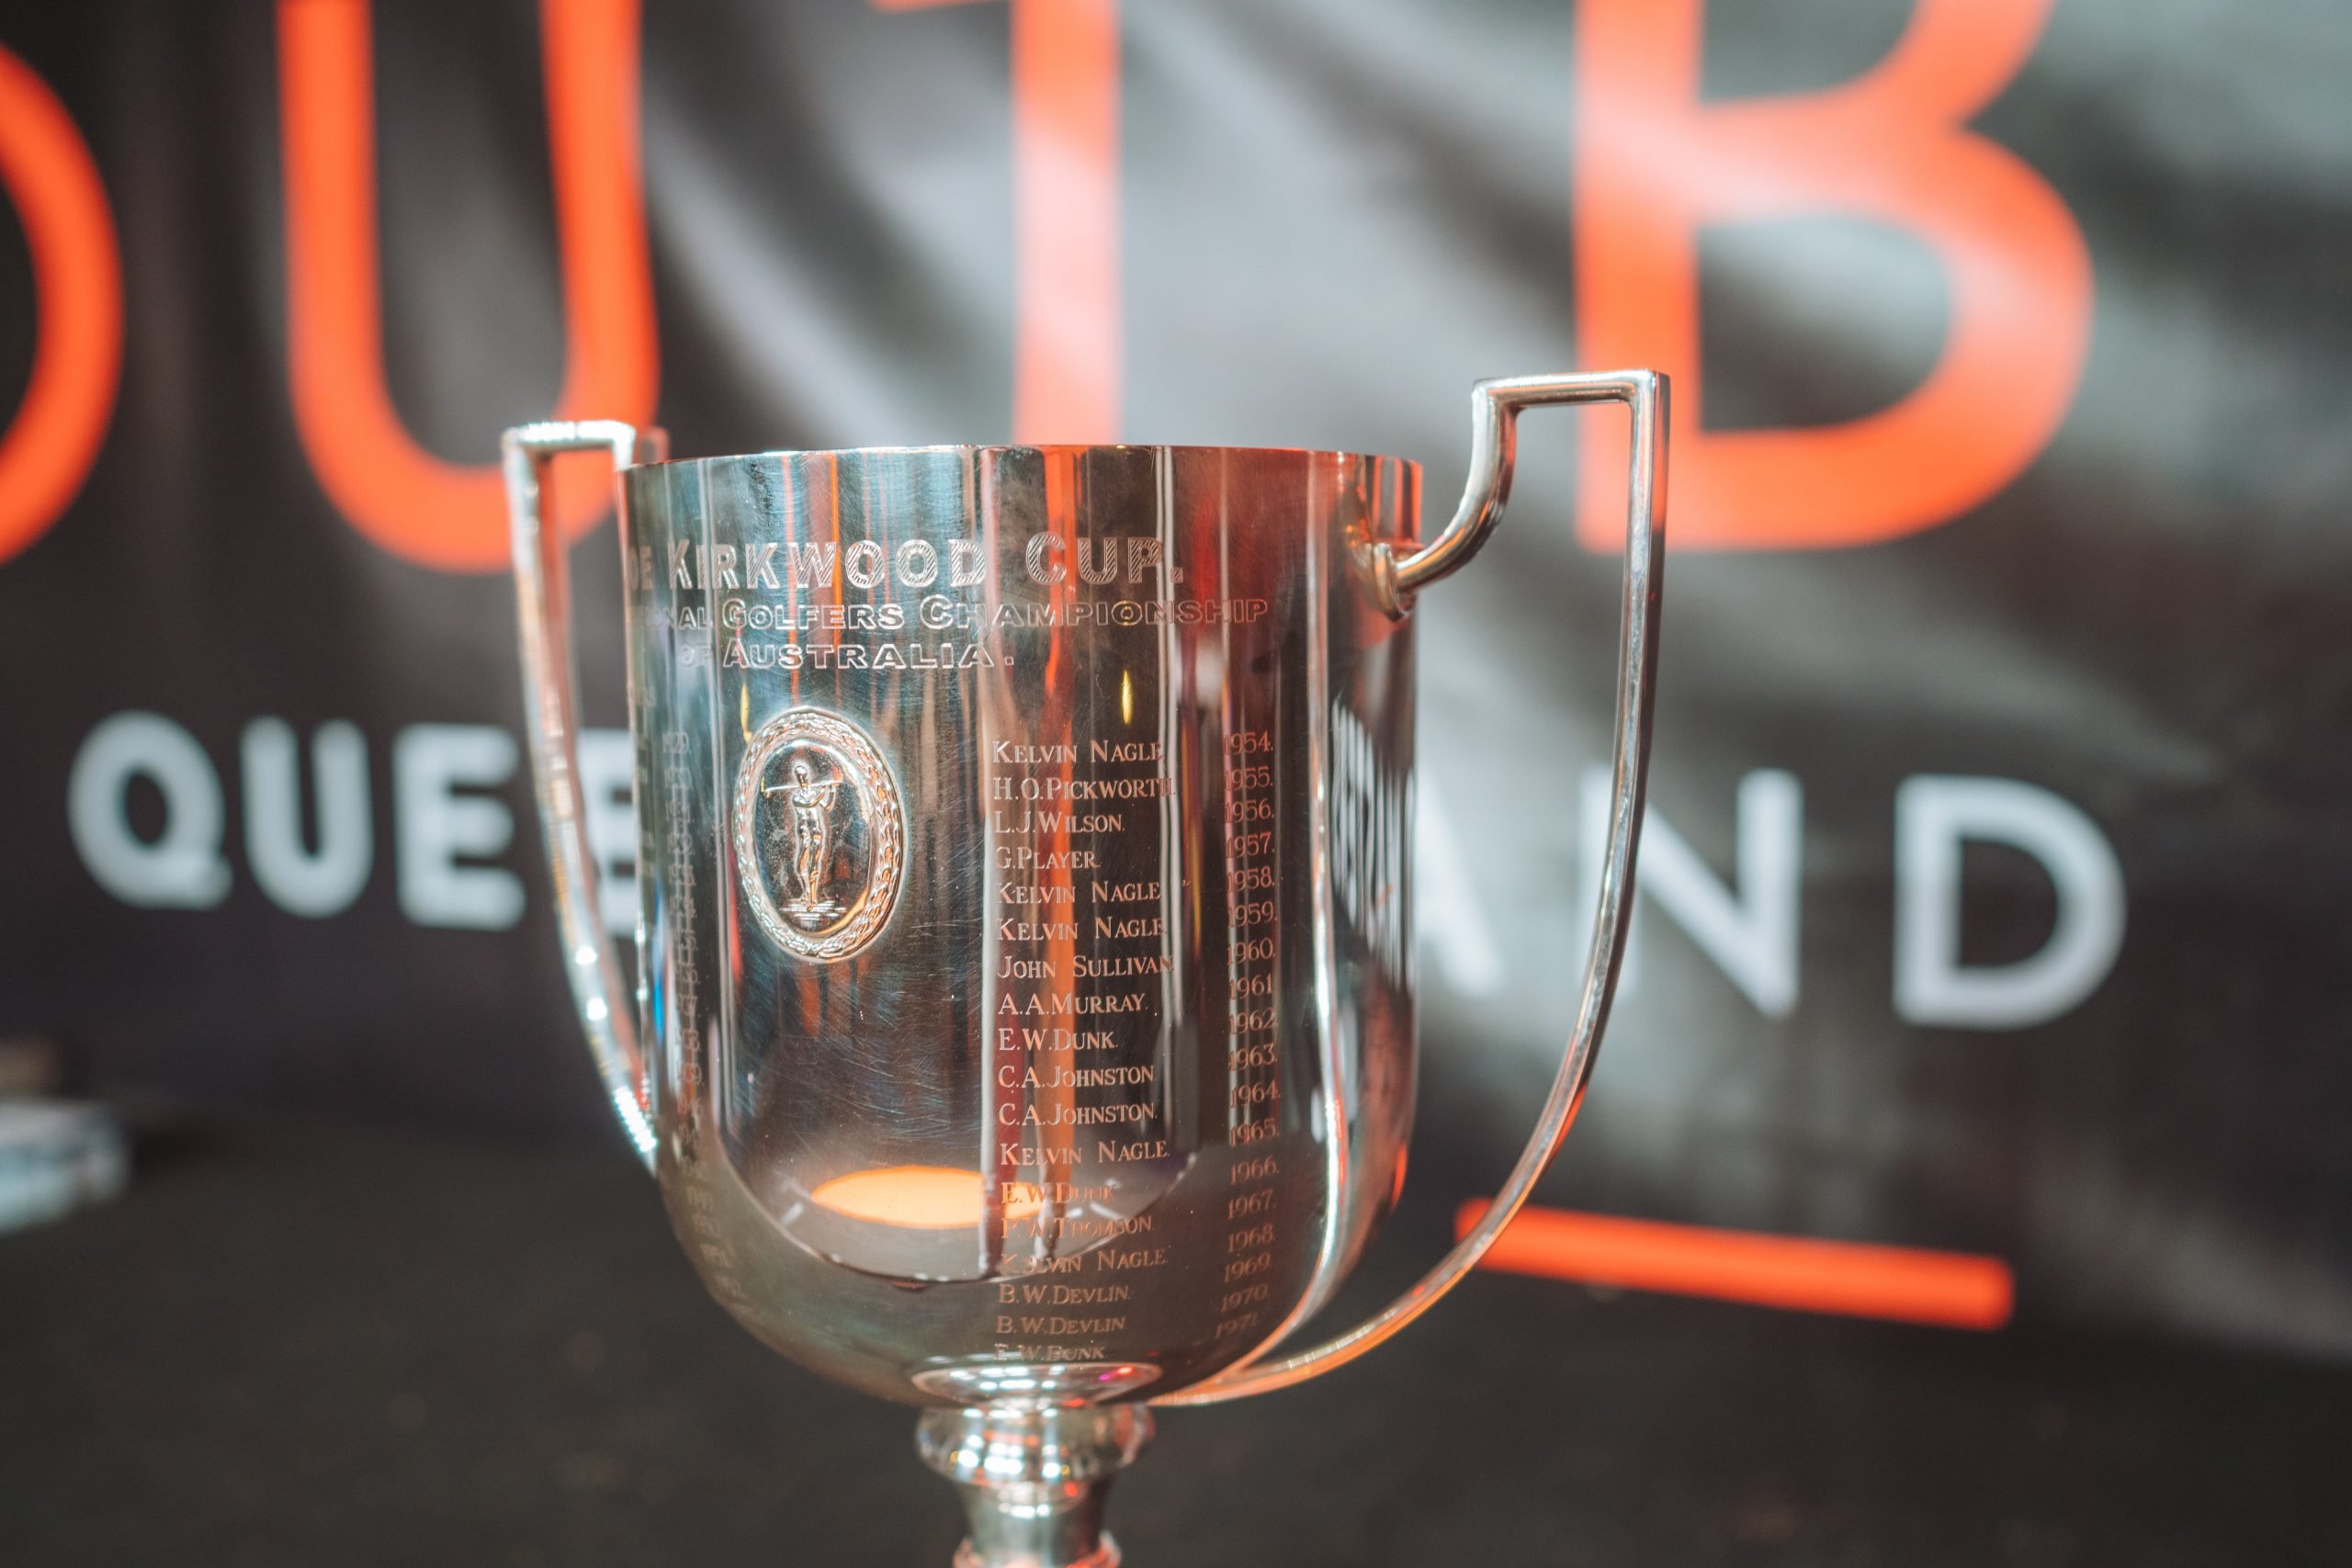 The Kirkwood Cup Trophy